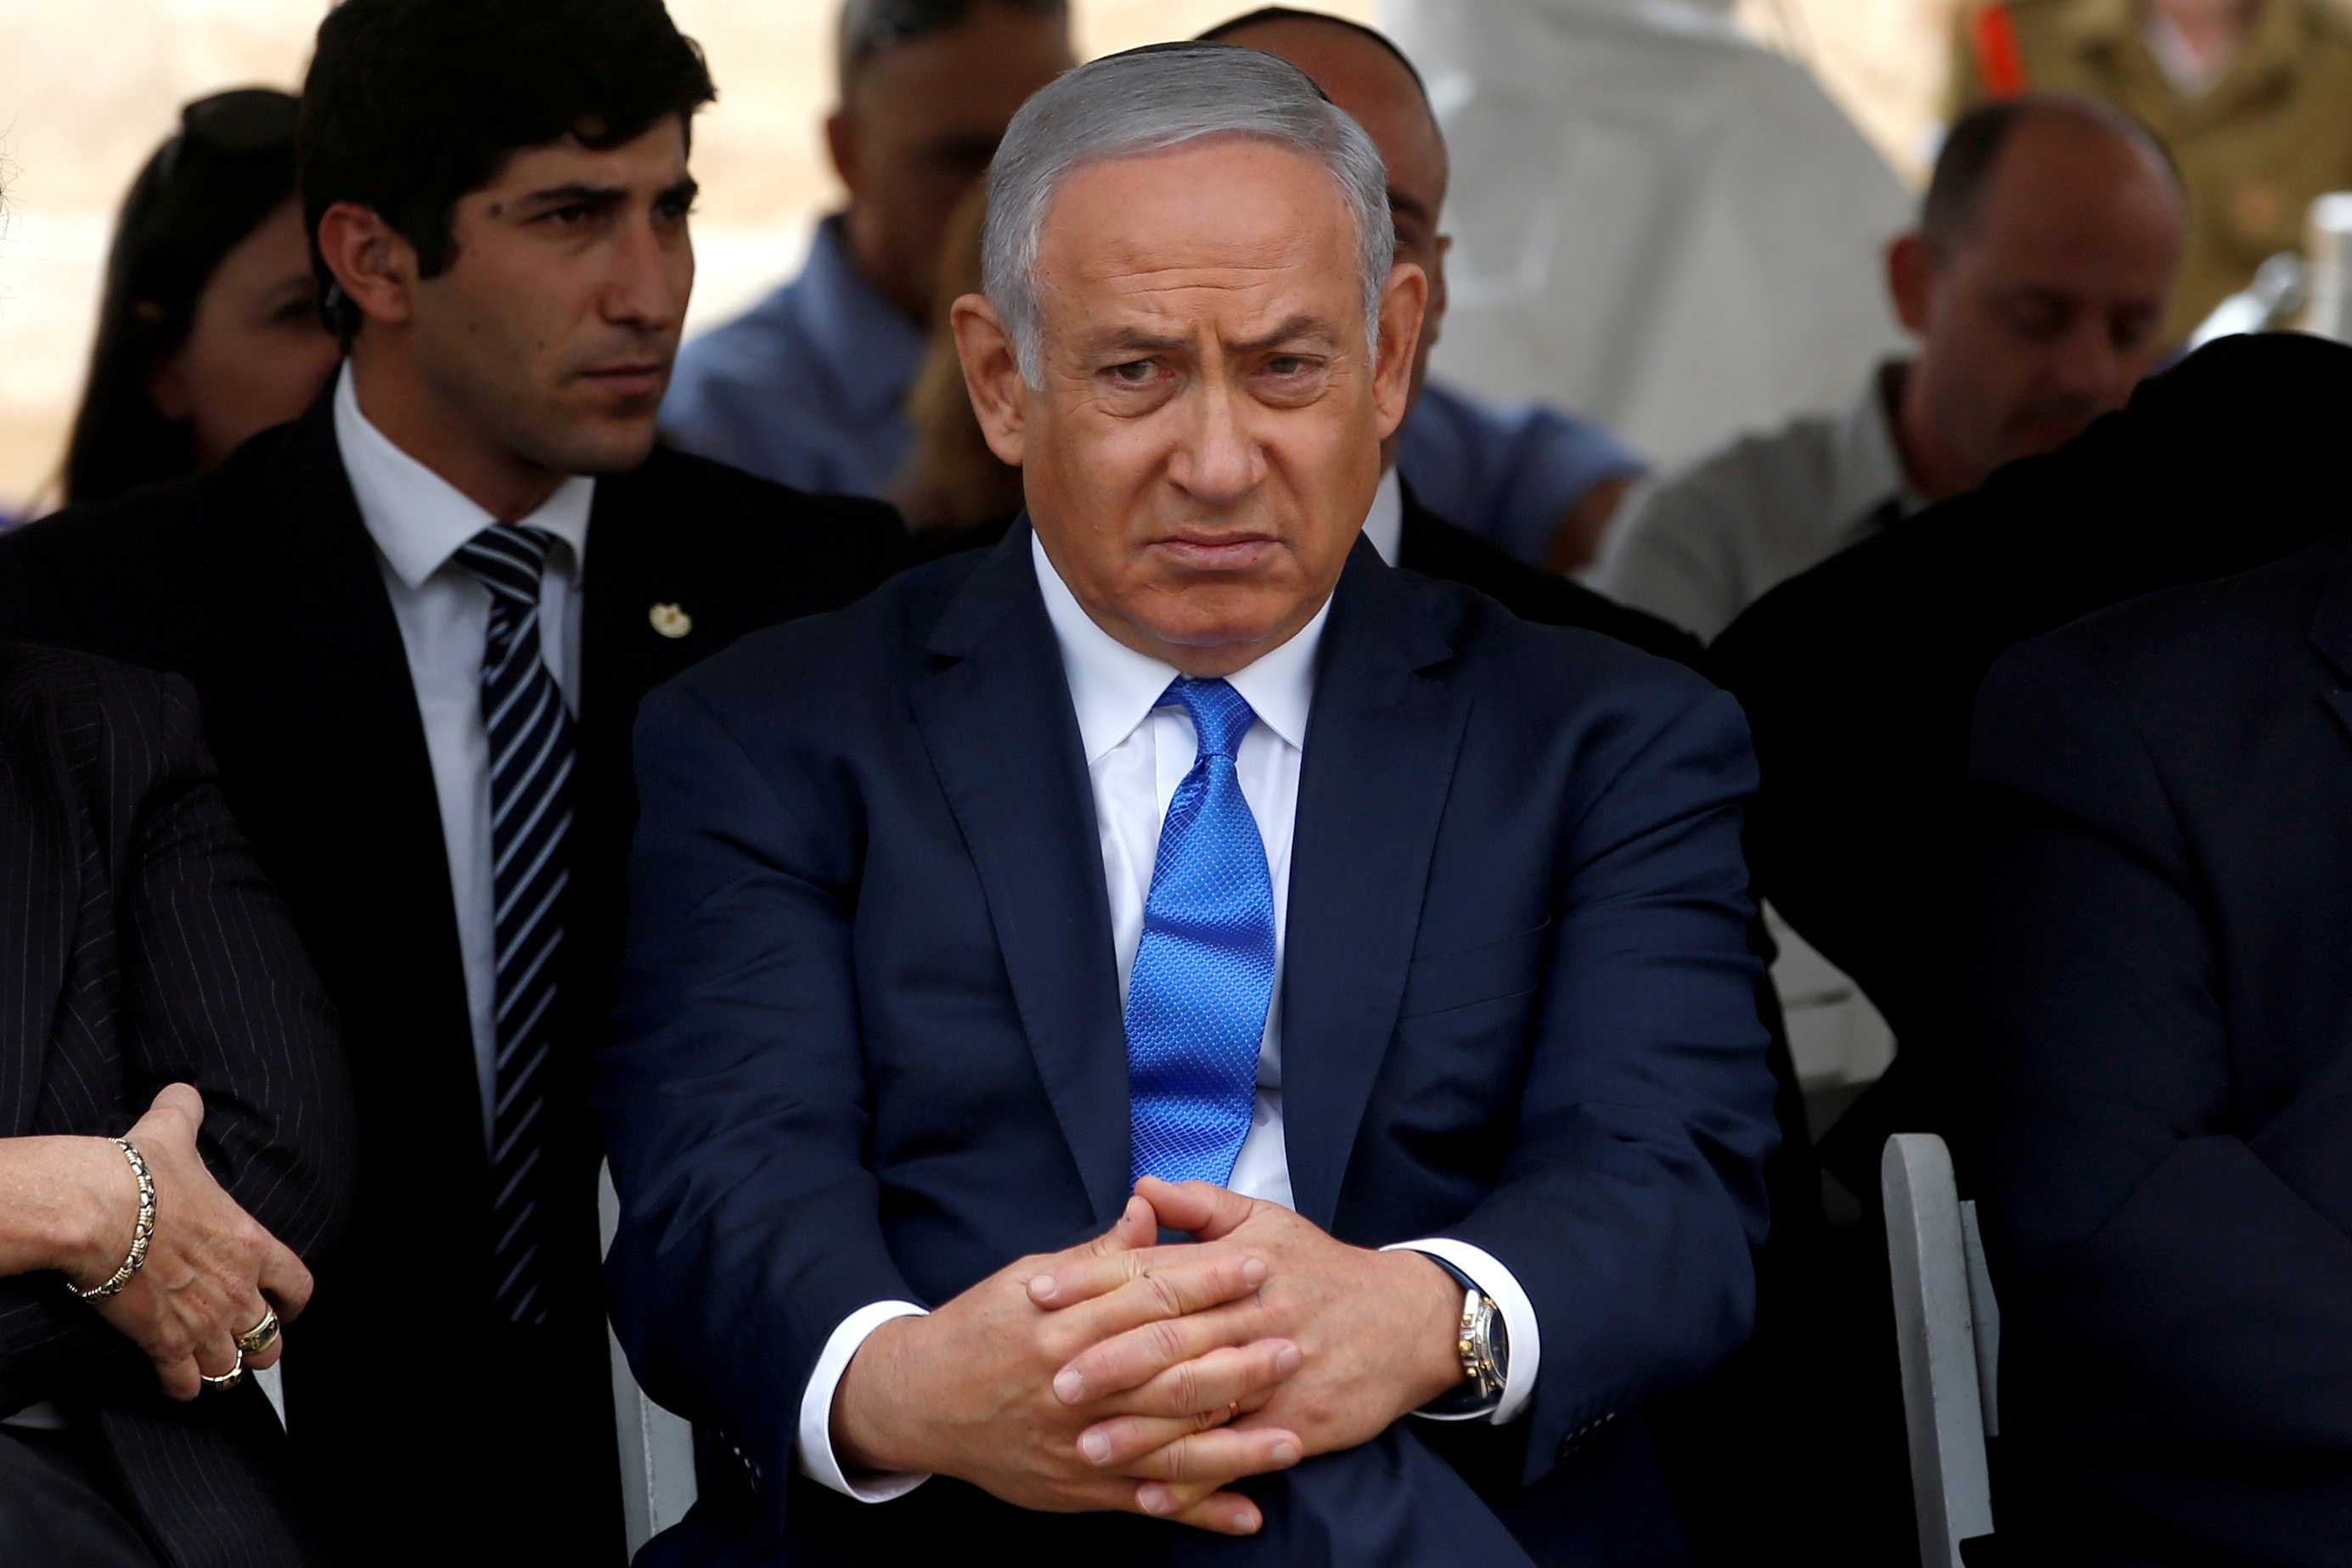 Netanyahu seeks to avert calls for election